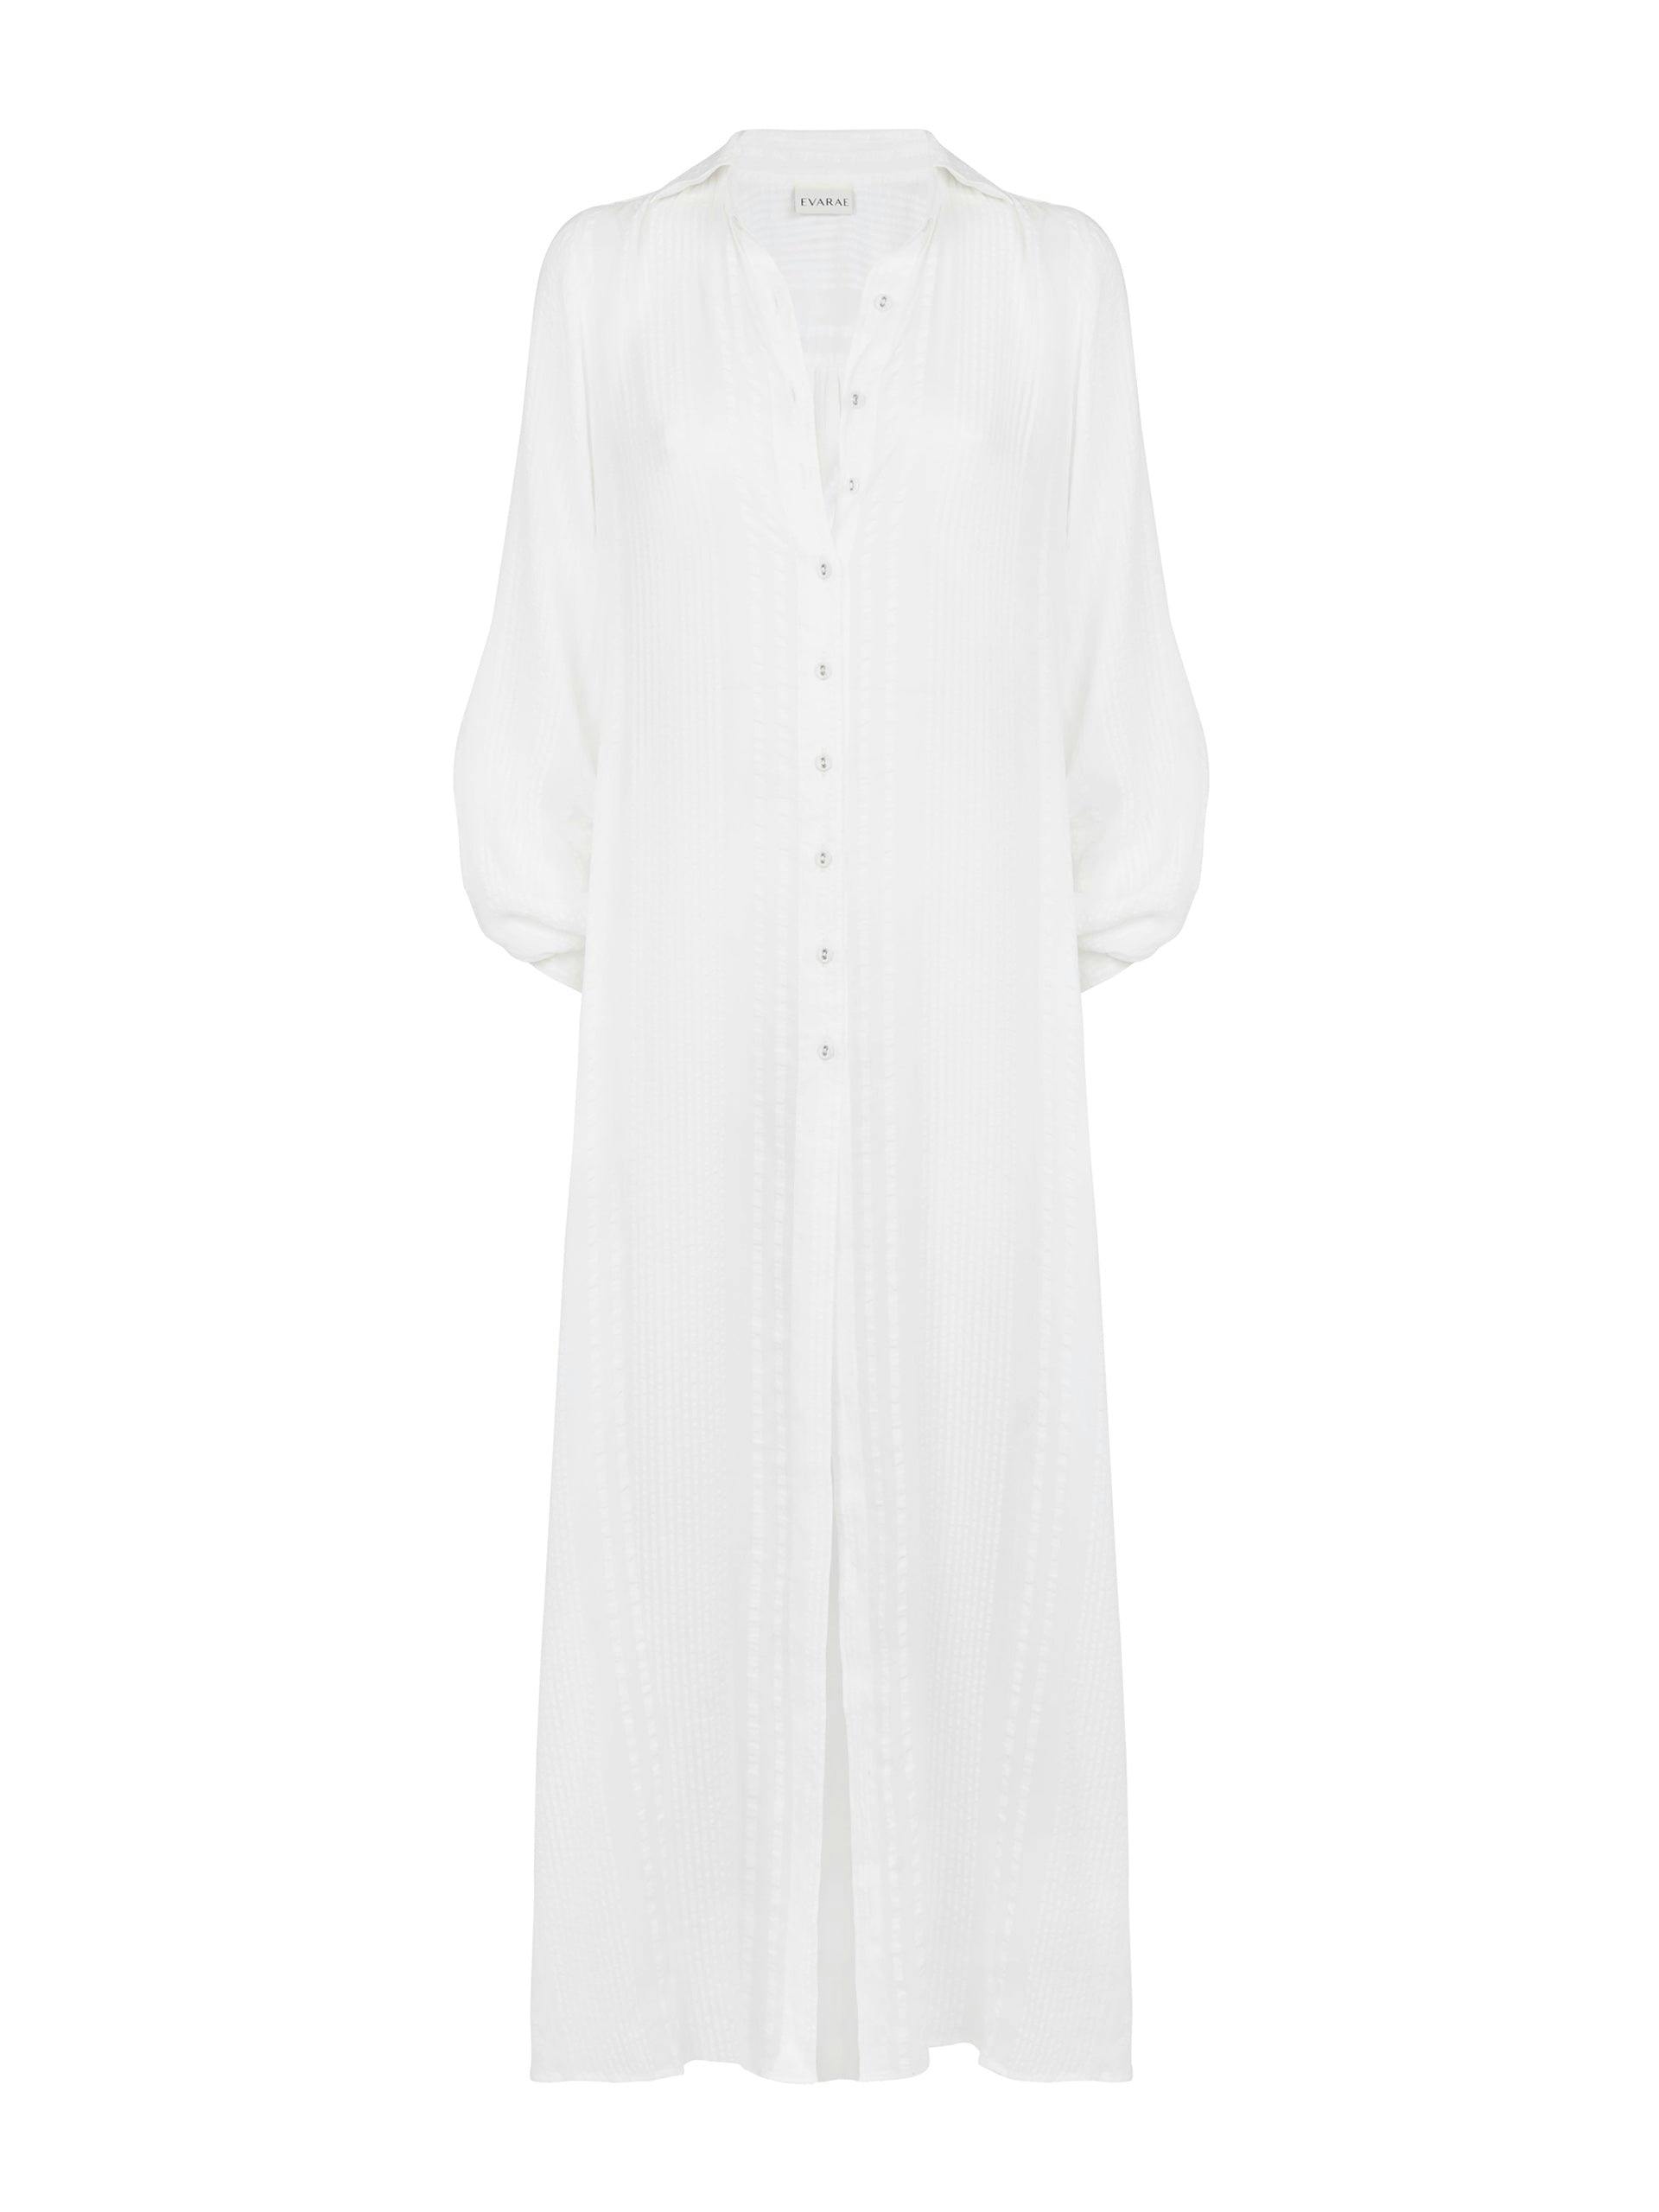 Soft white Leia dress in Lyocell Tencel